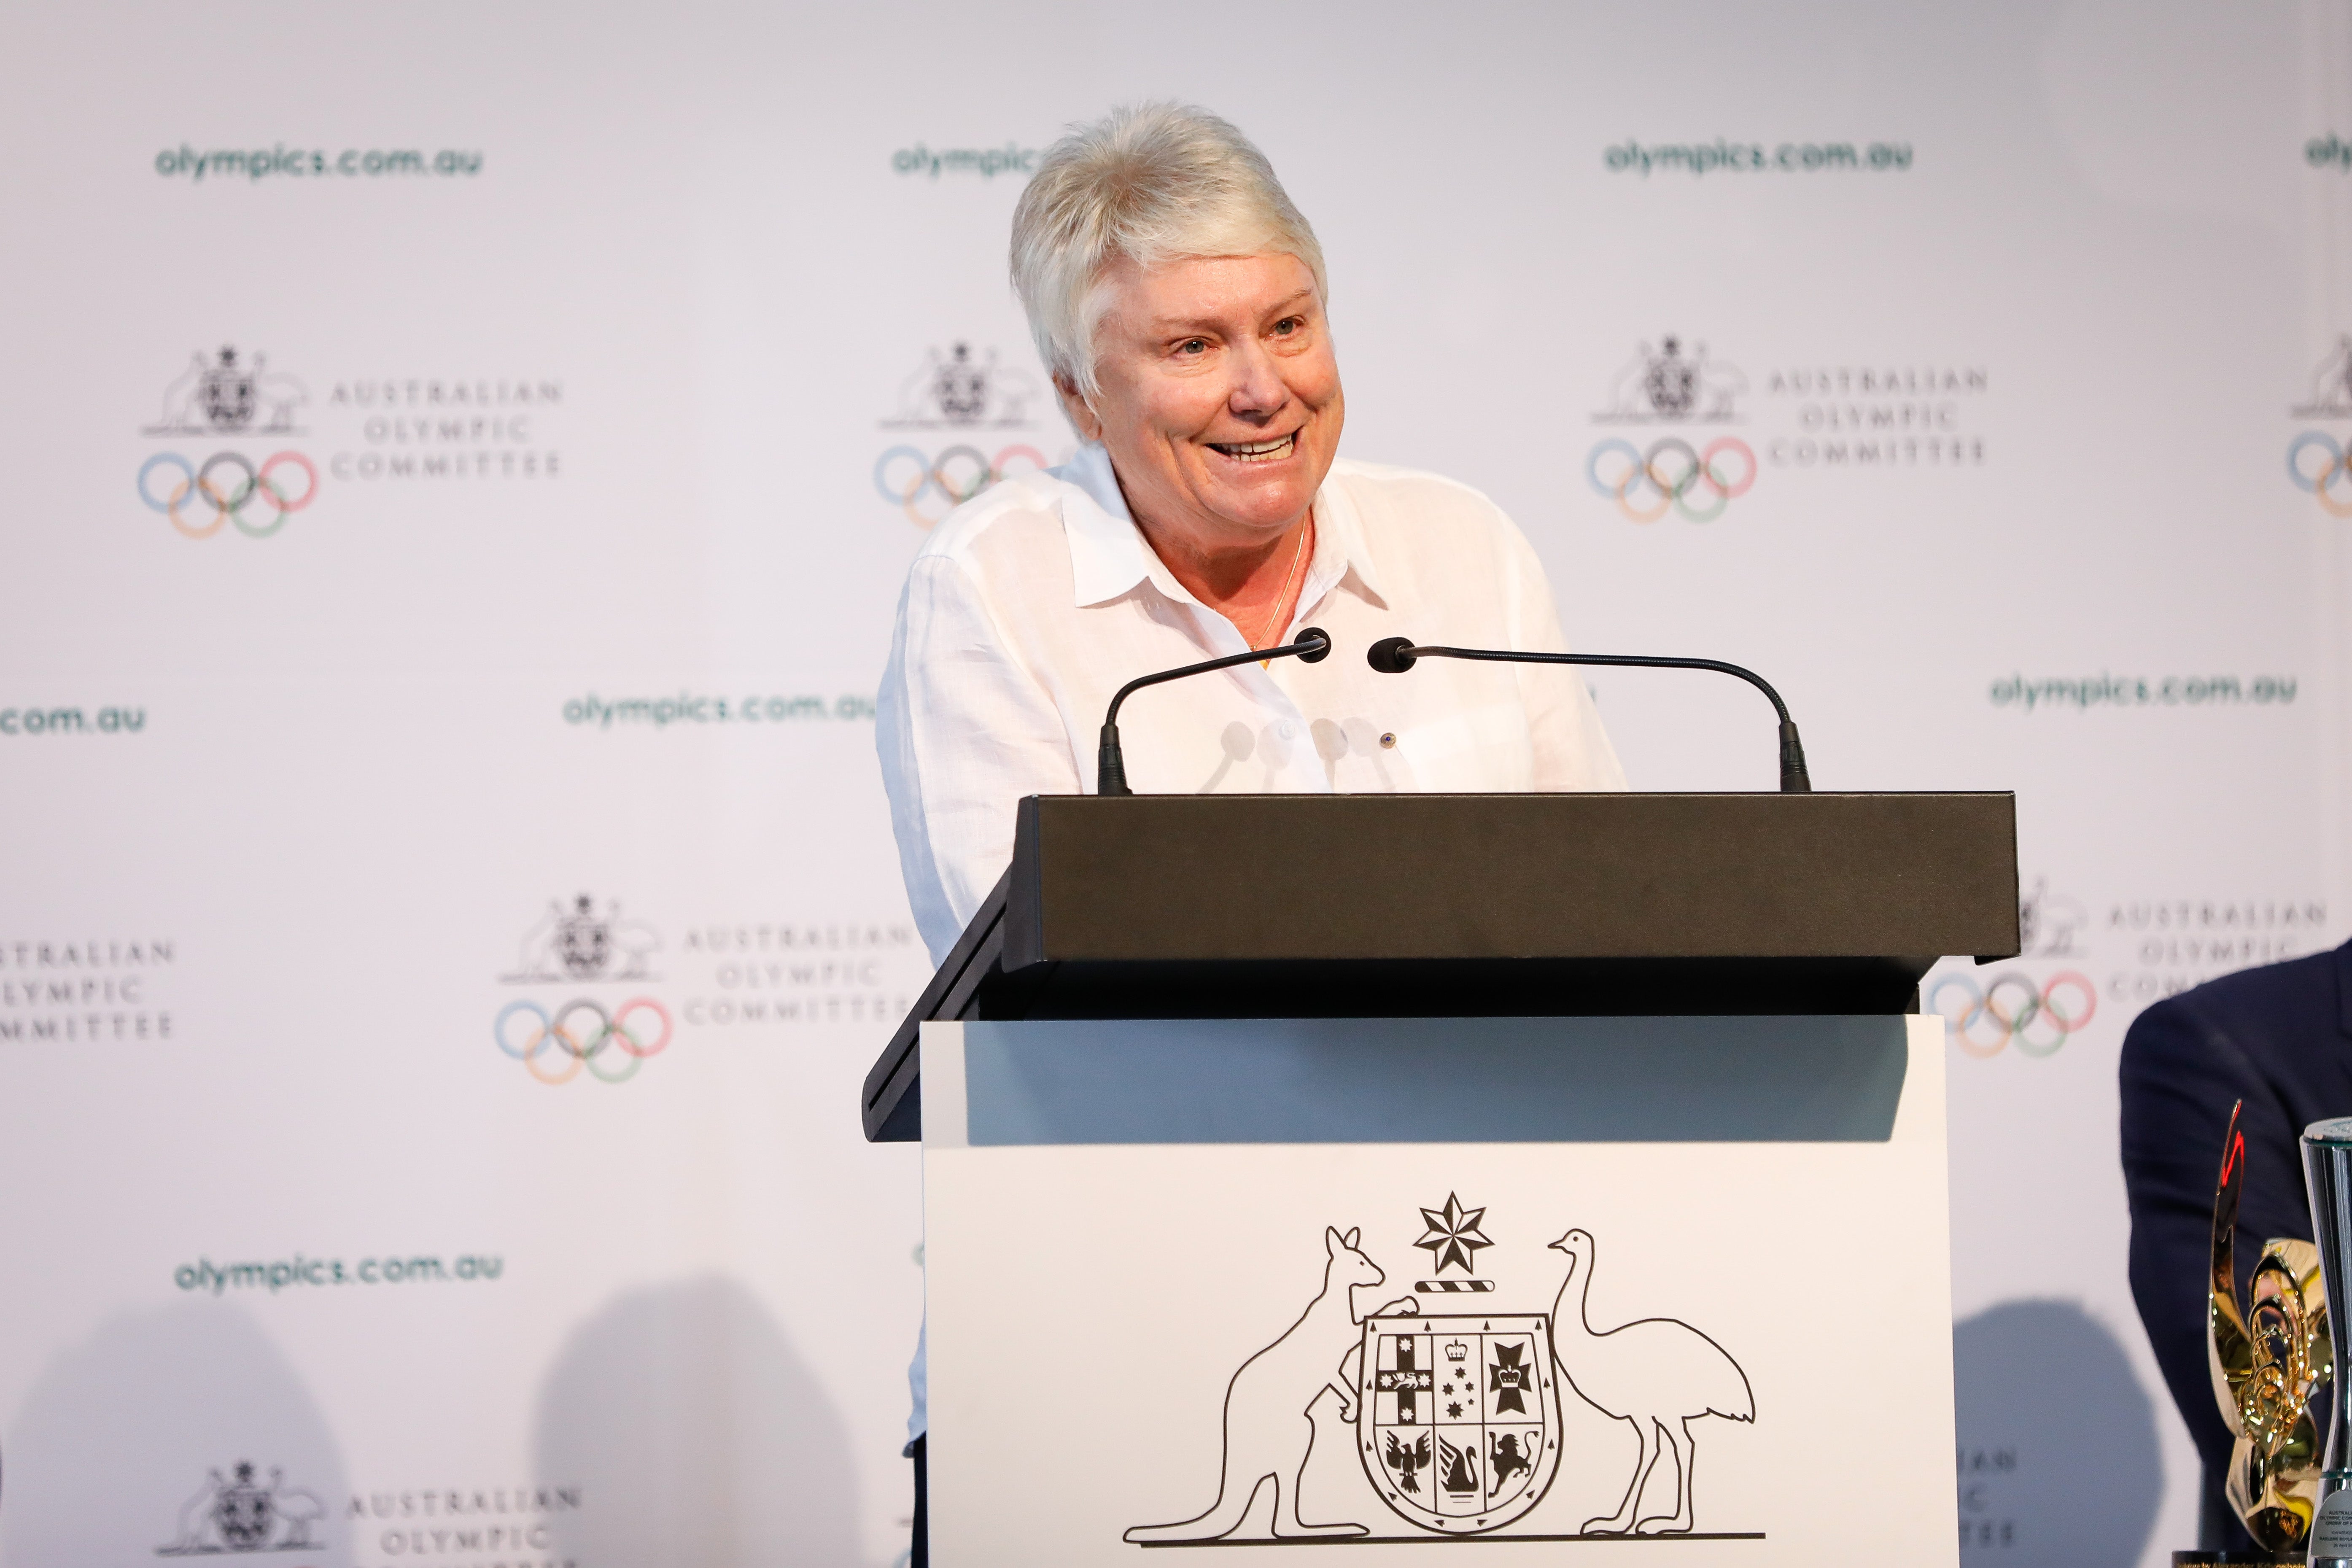 Raelene Boyle fears Brisbane will appear to be a cheapskate Olympics